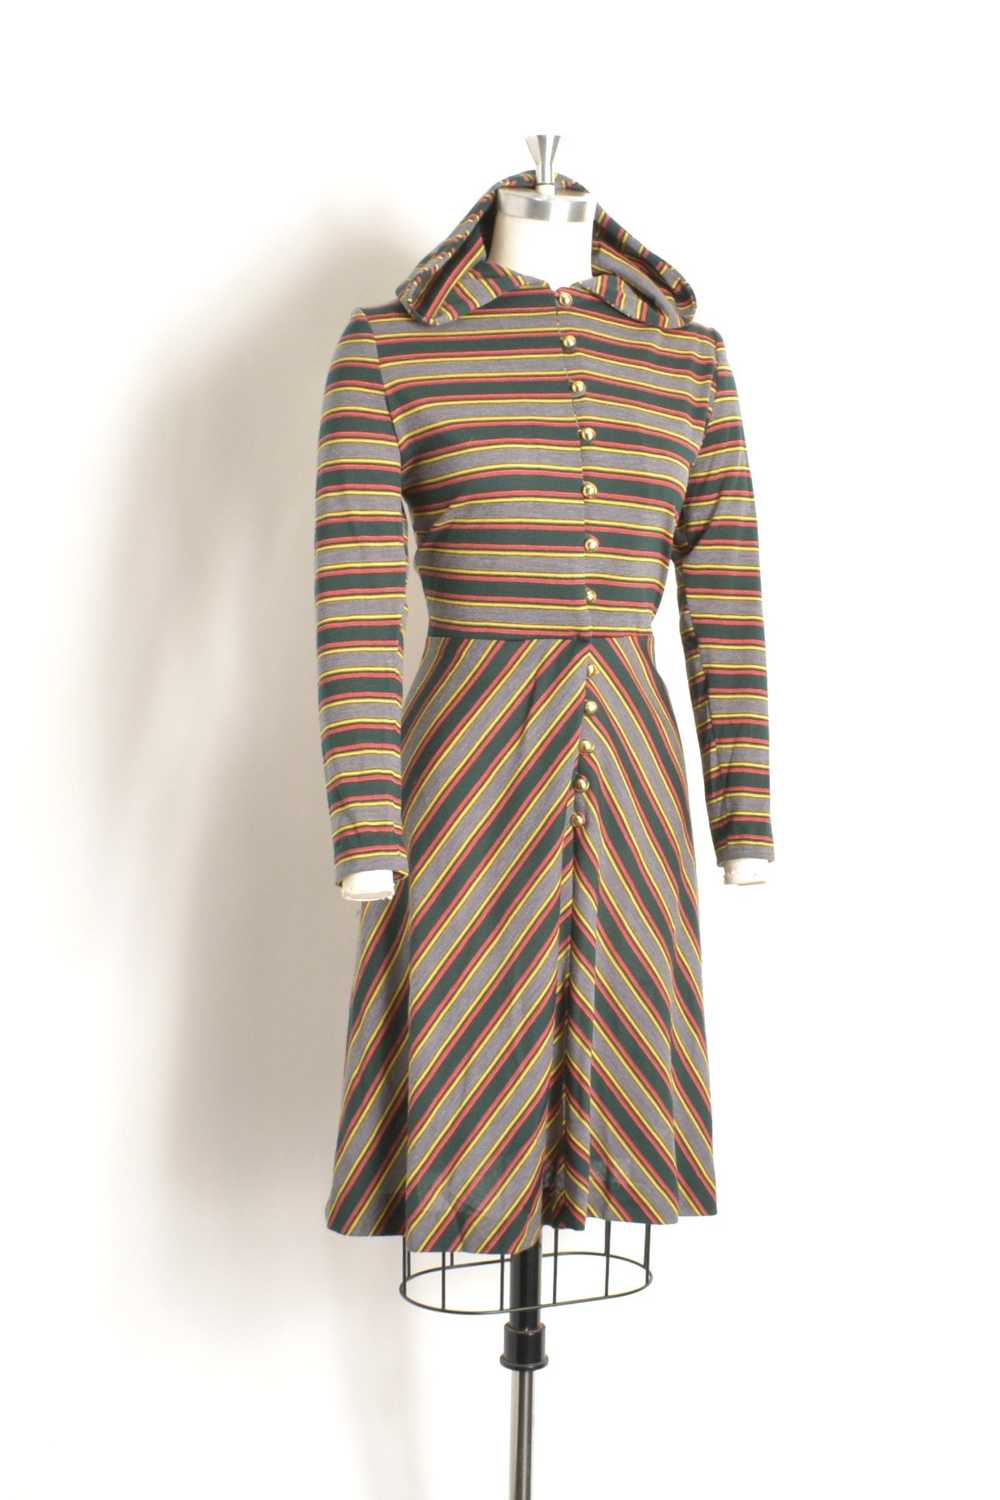 1970s Striped Hooded Dress-medium - image 3